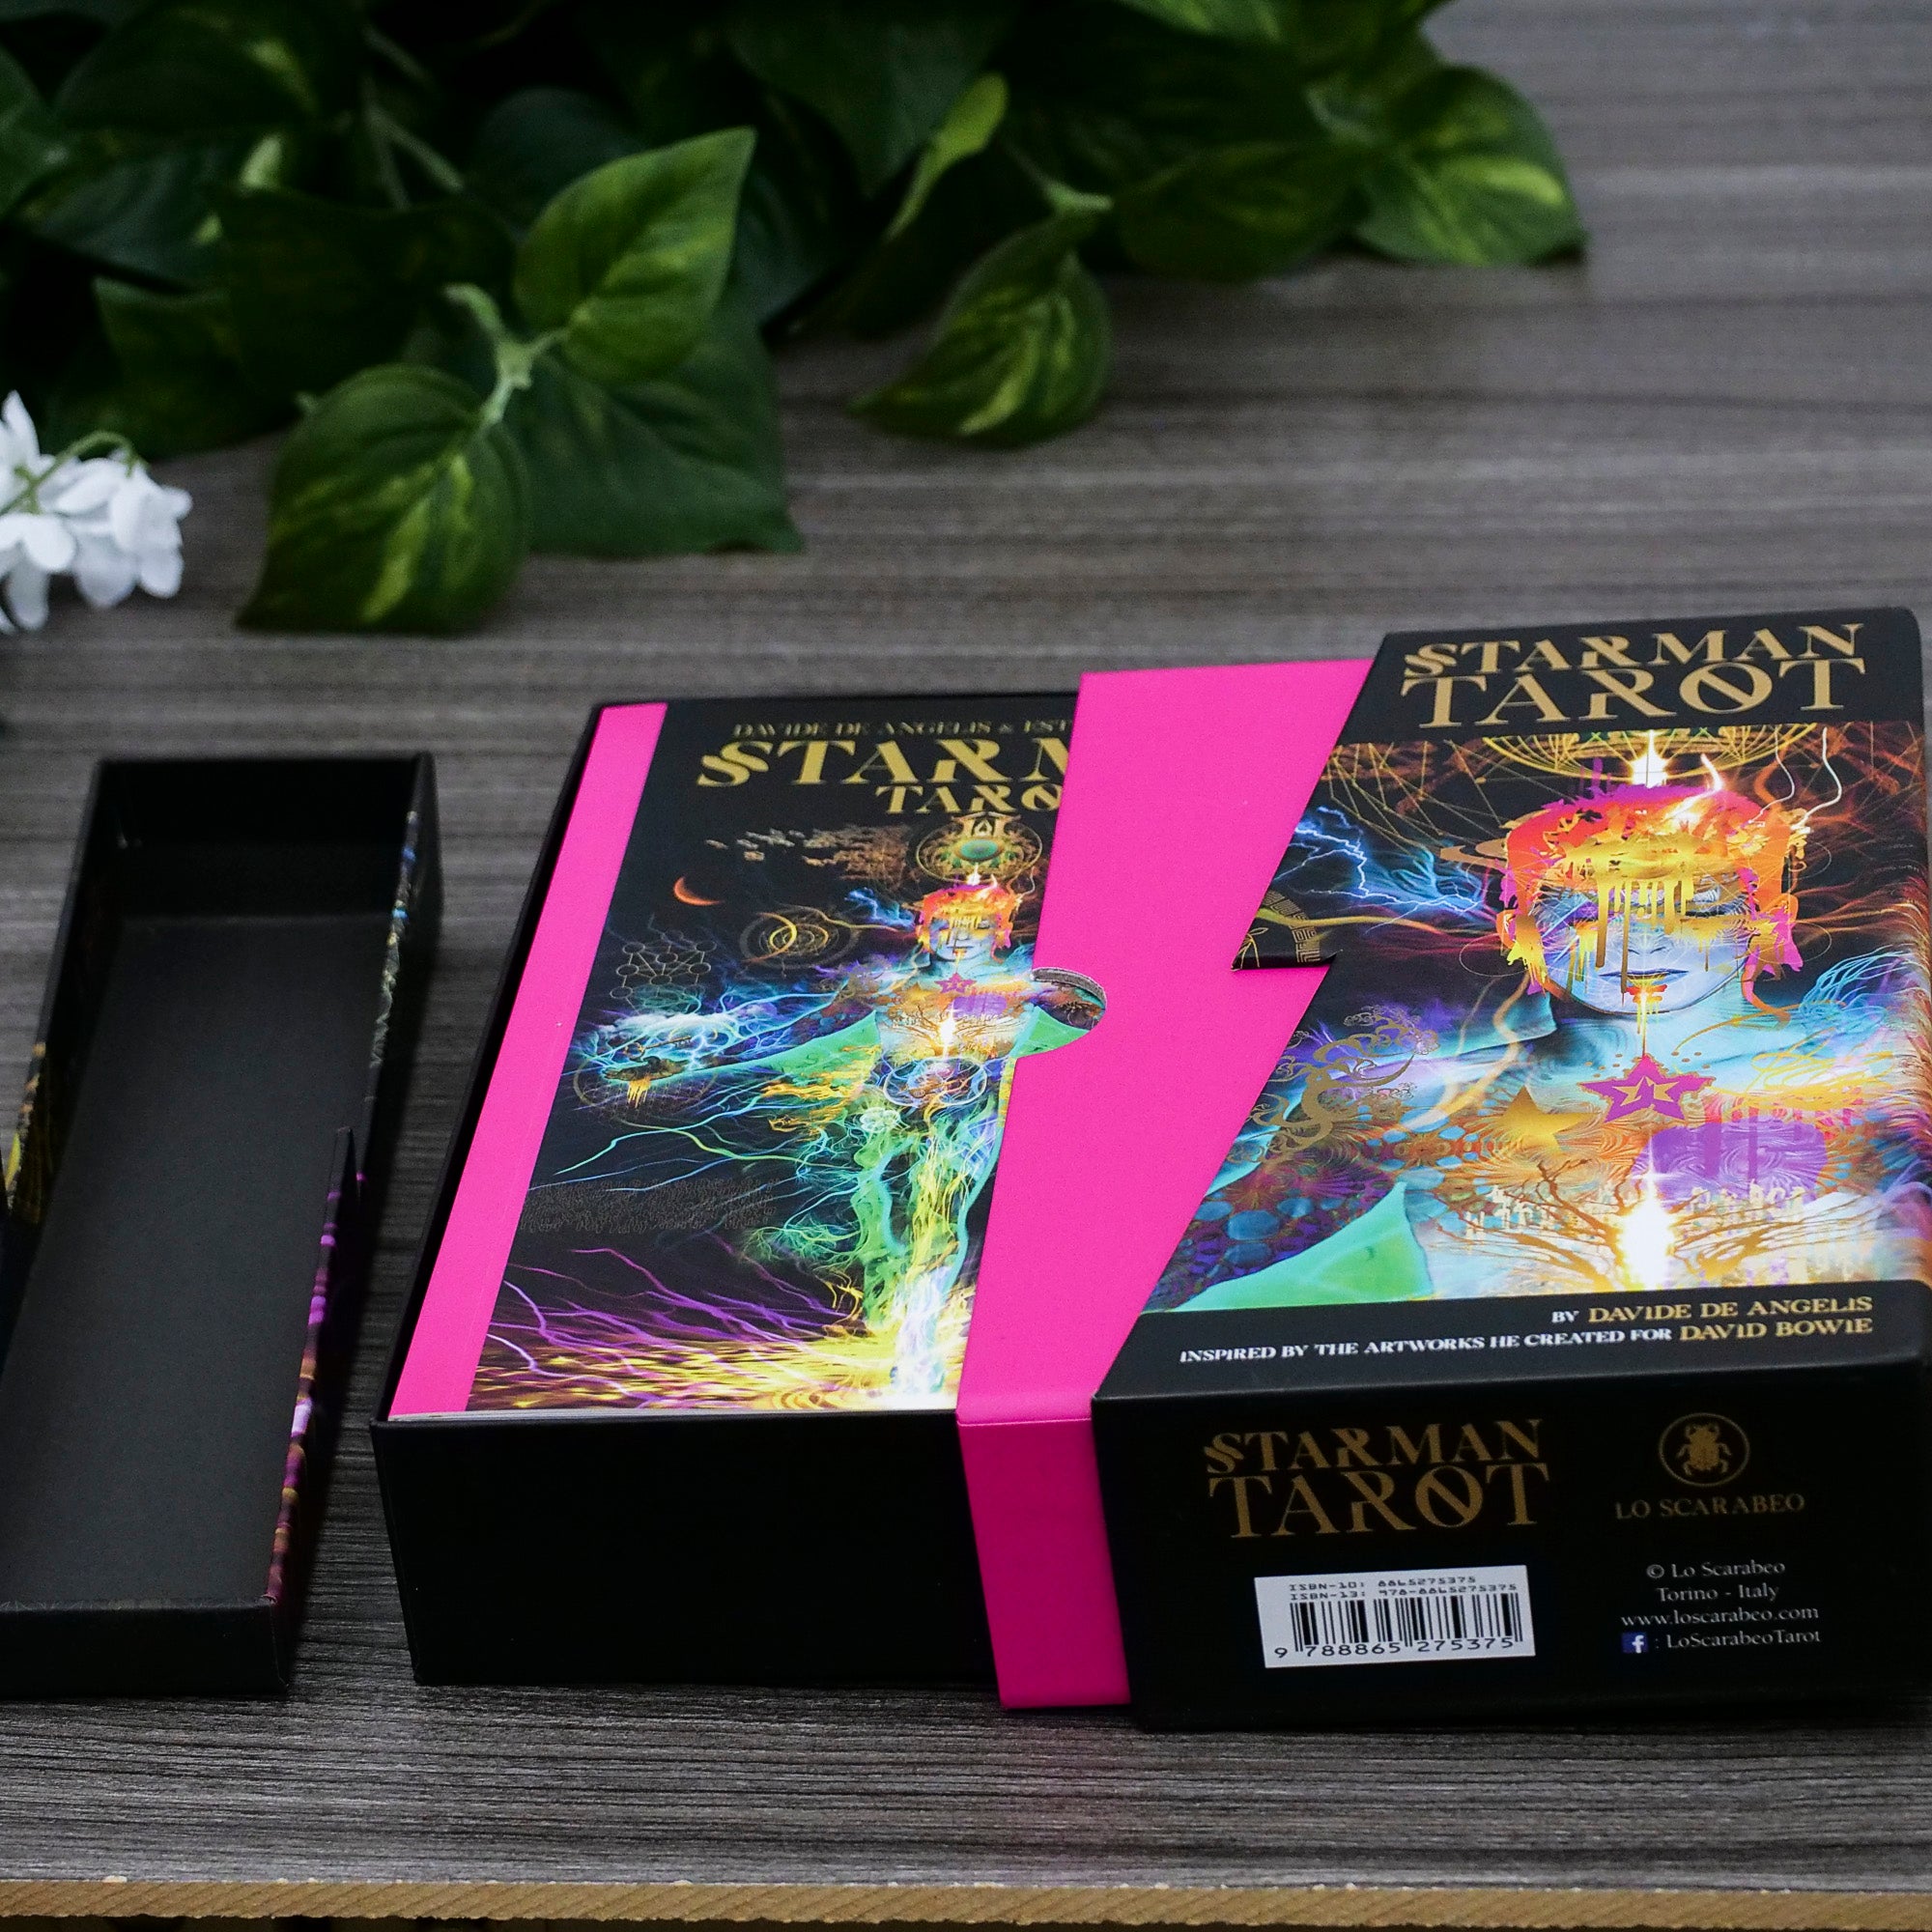 Starman Tarot Books & Tarot Crystal Magic online 